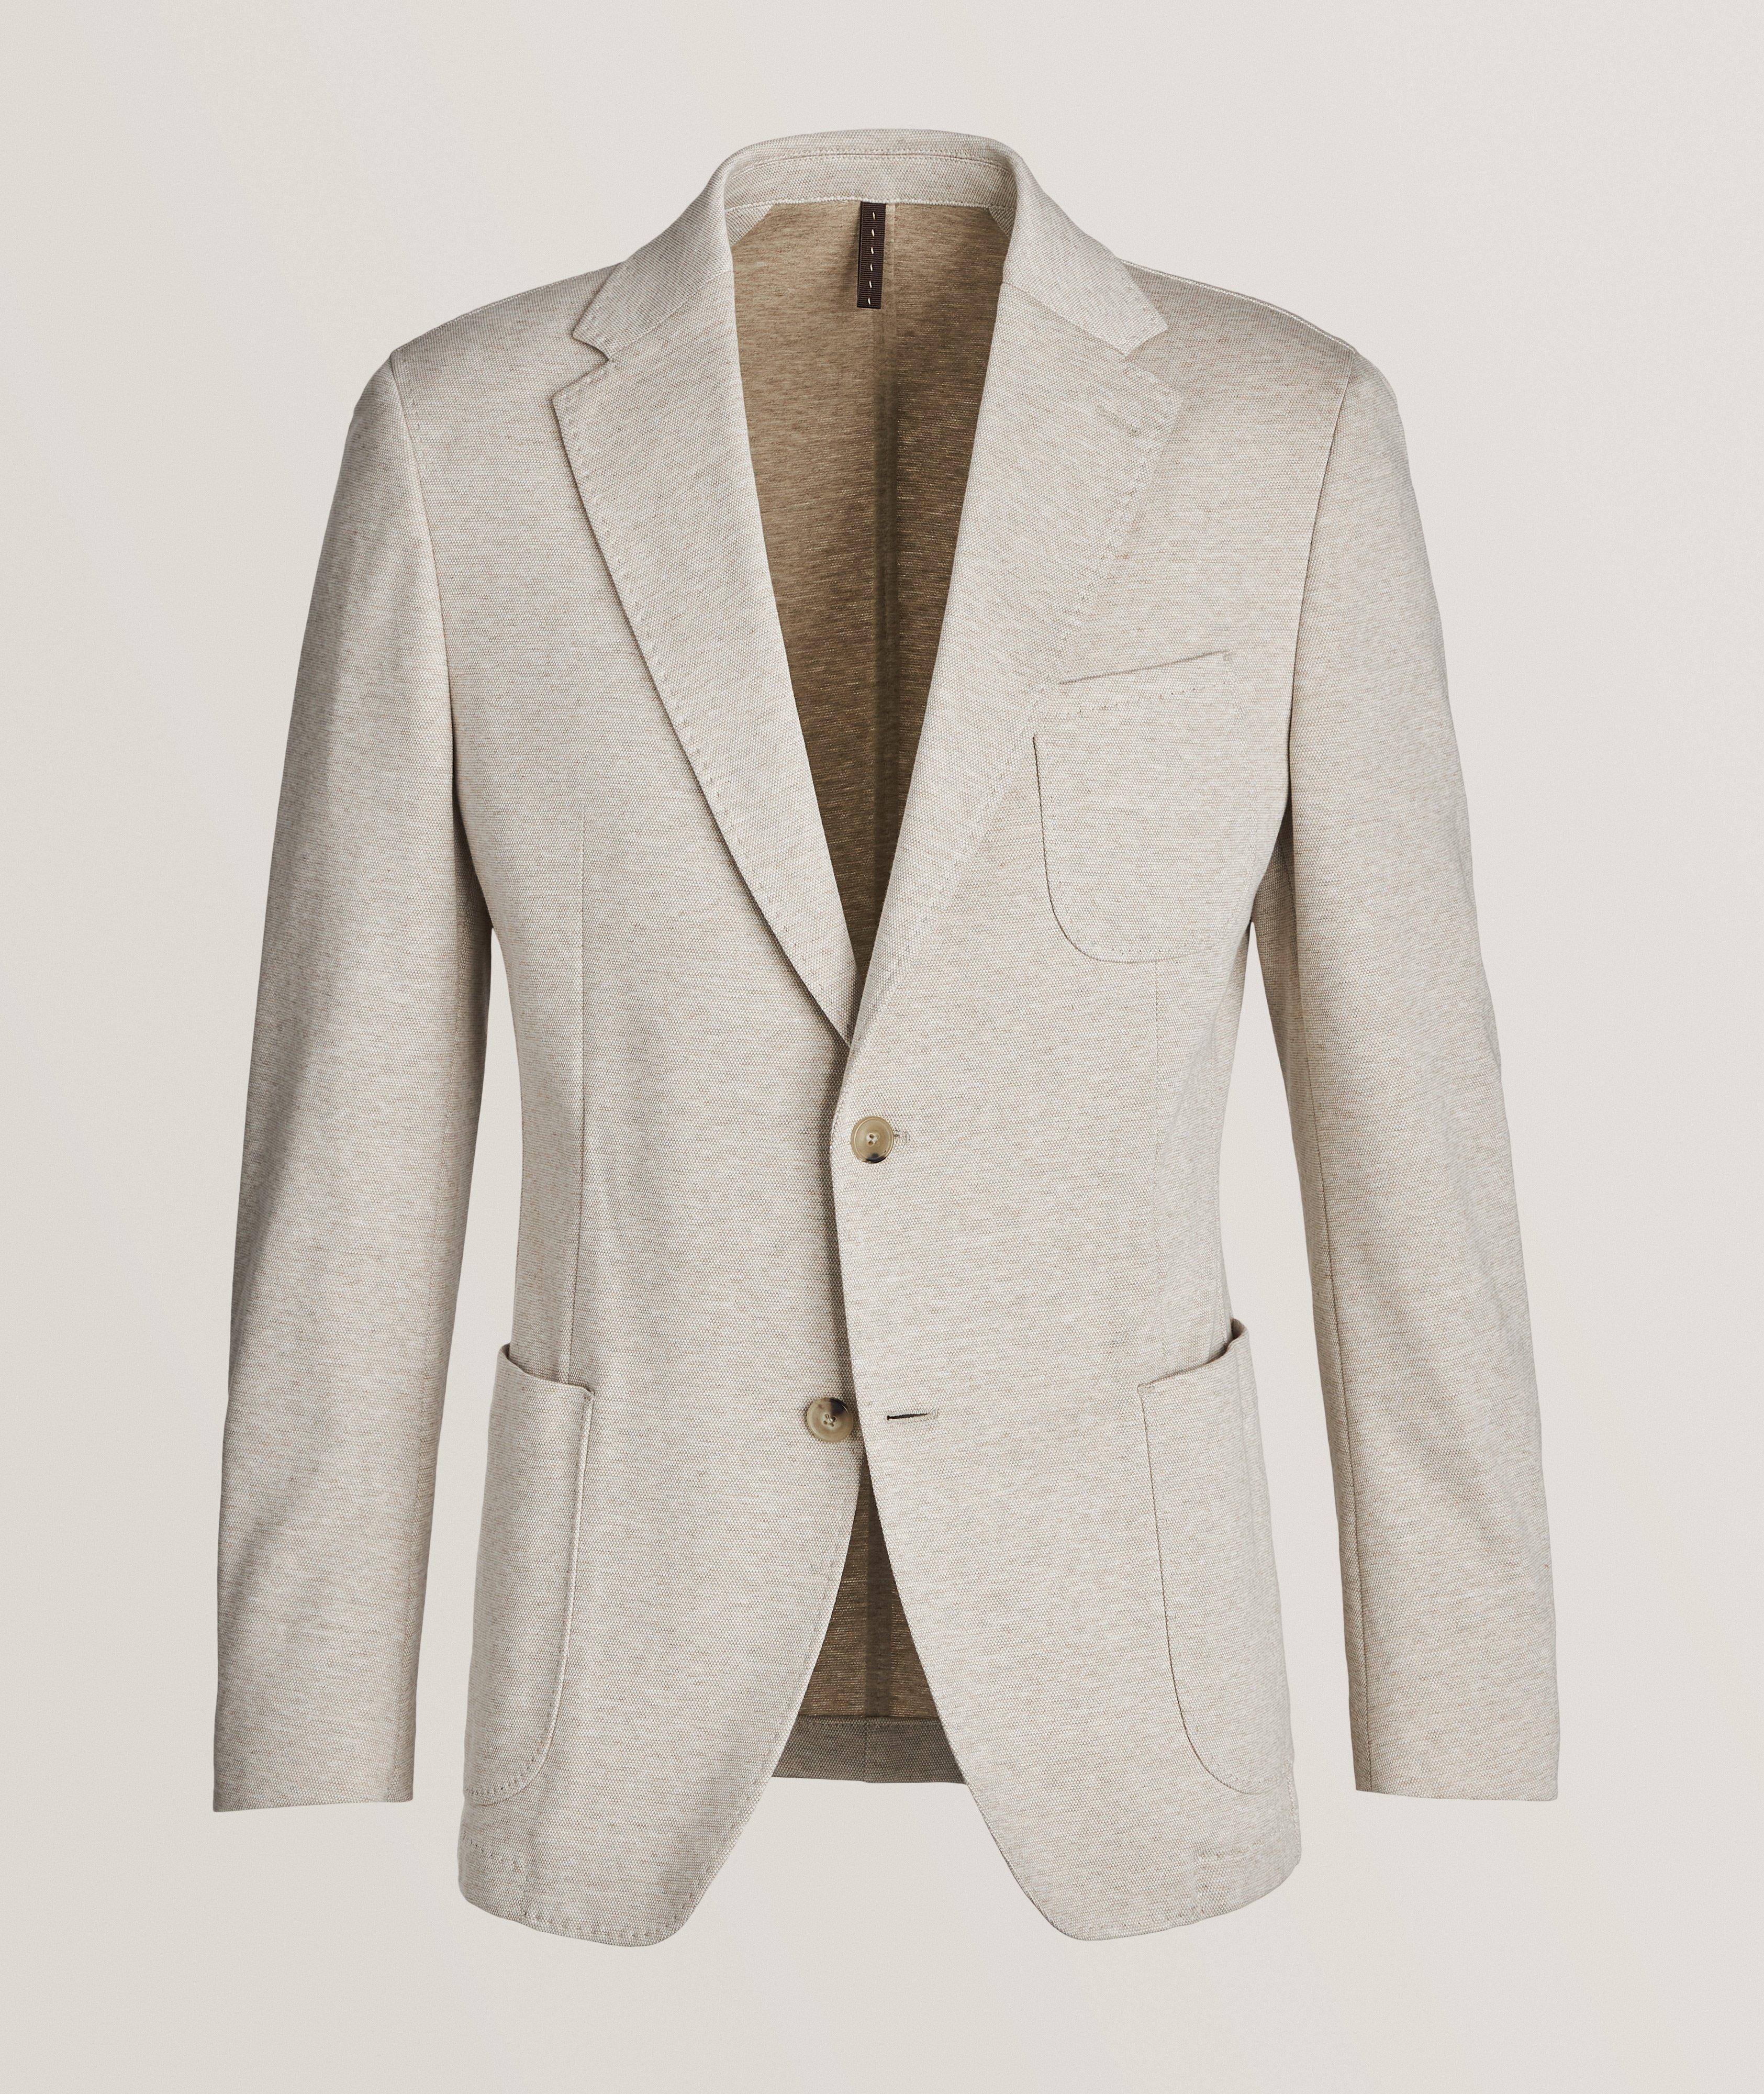 Maglia Textured Cotton-Blend Sport Jacket